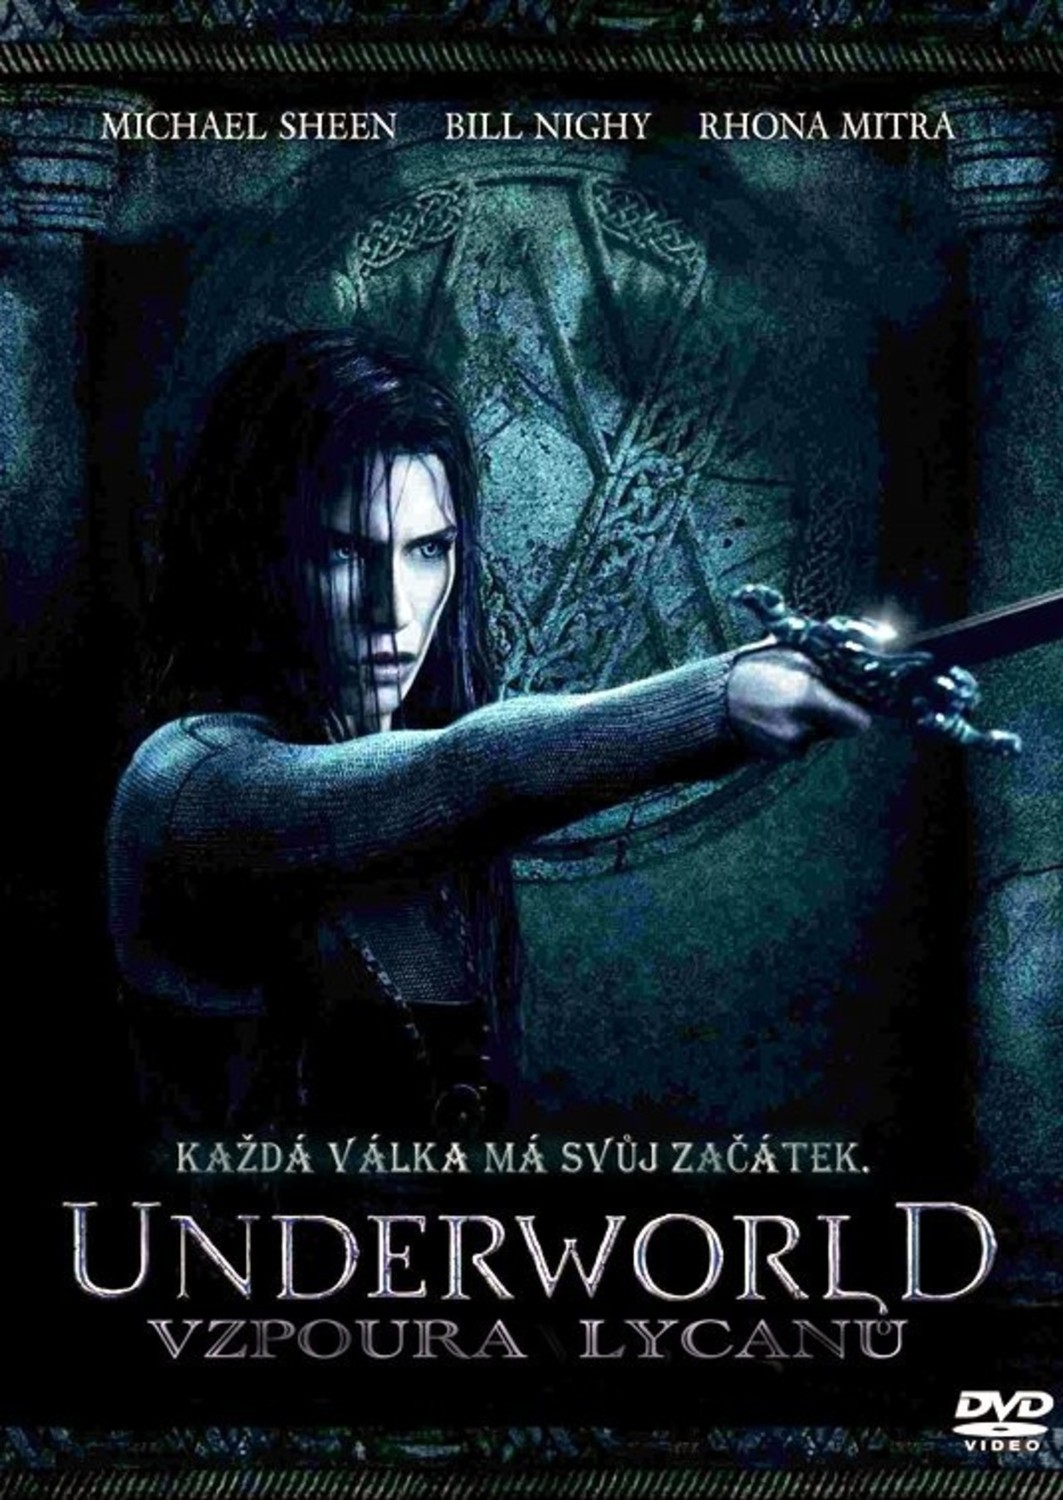 Stiahni si Filmy DVD Underworld: Vzpoura Lycanu  = CSFD 61%